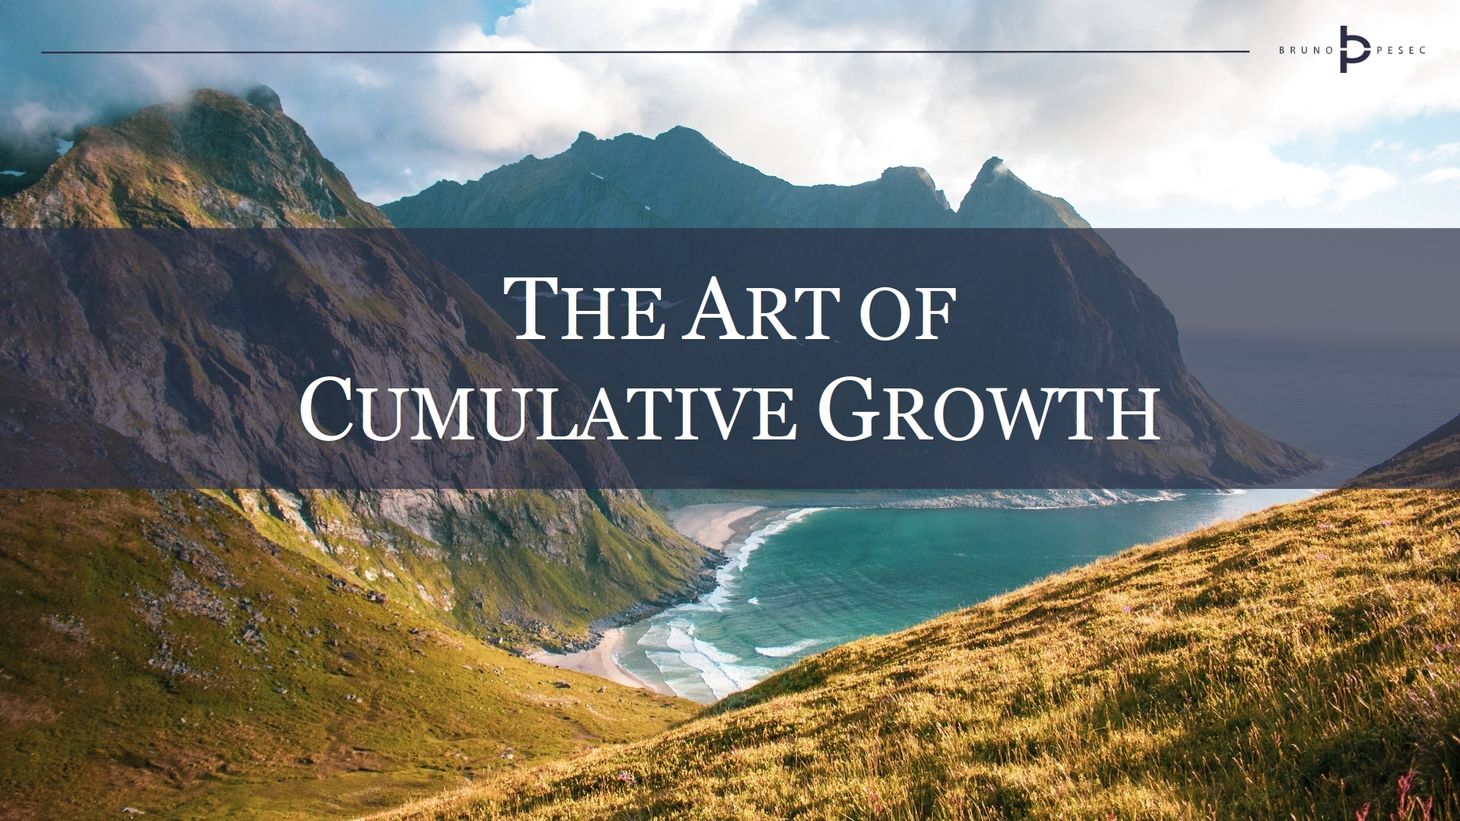 The art of cumulative growth